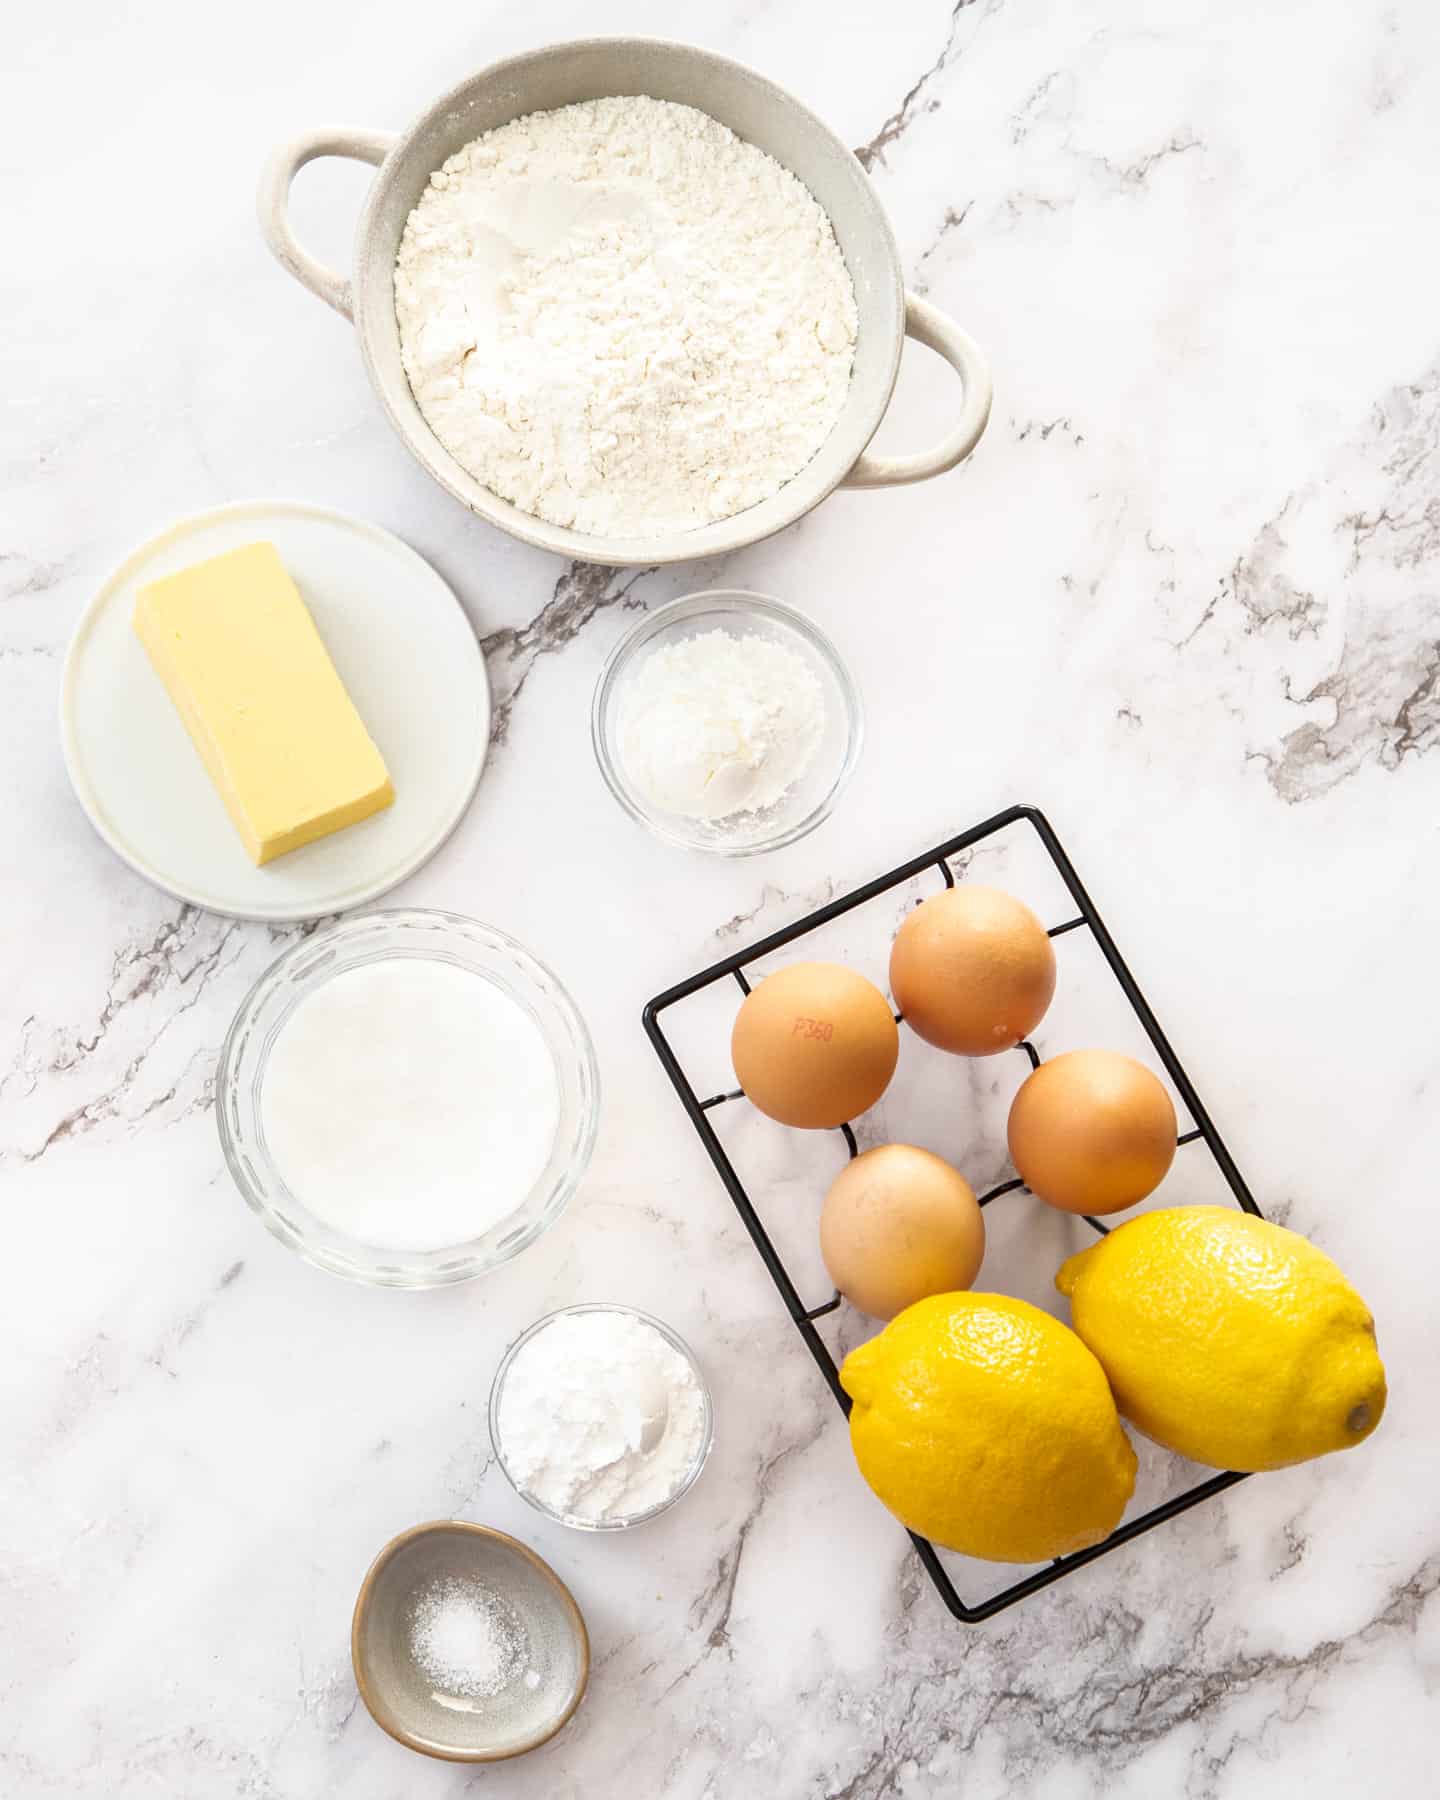 Ingredients for lemon tartlets on a marble surface.